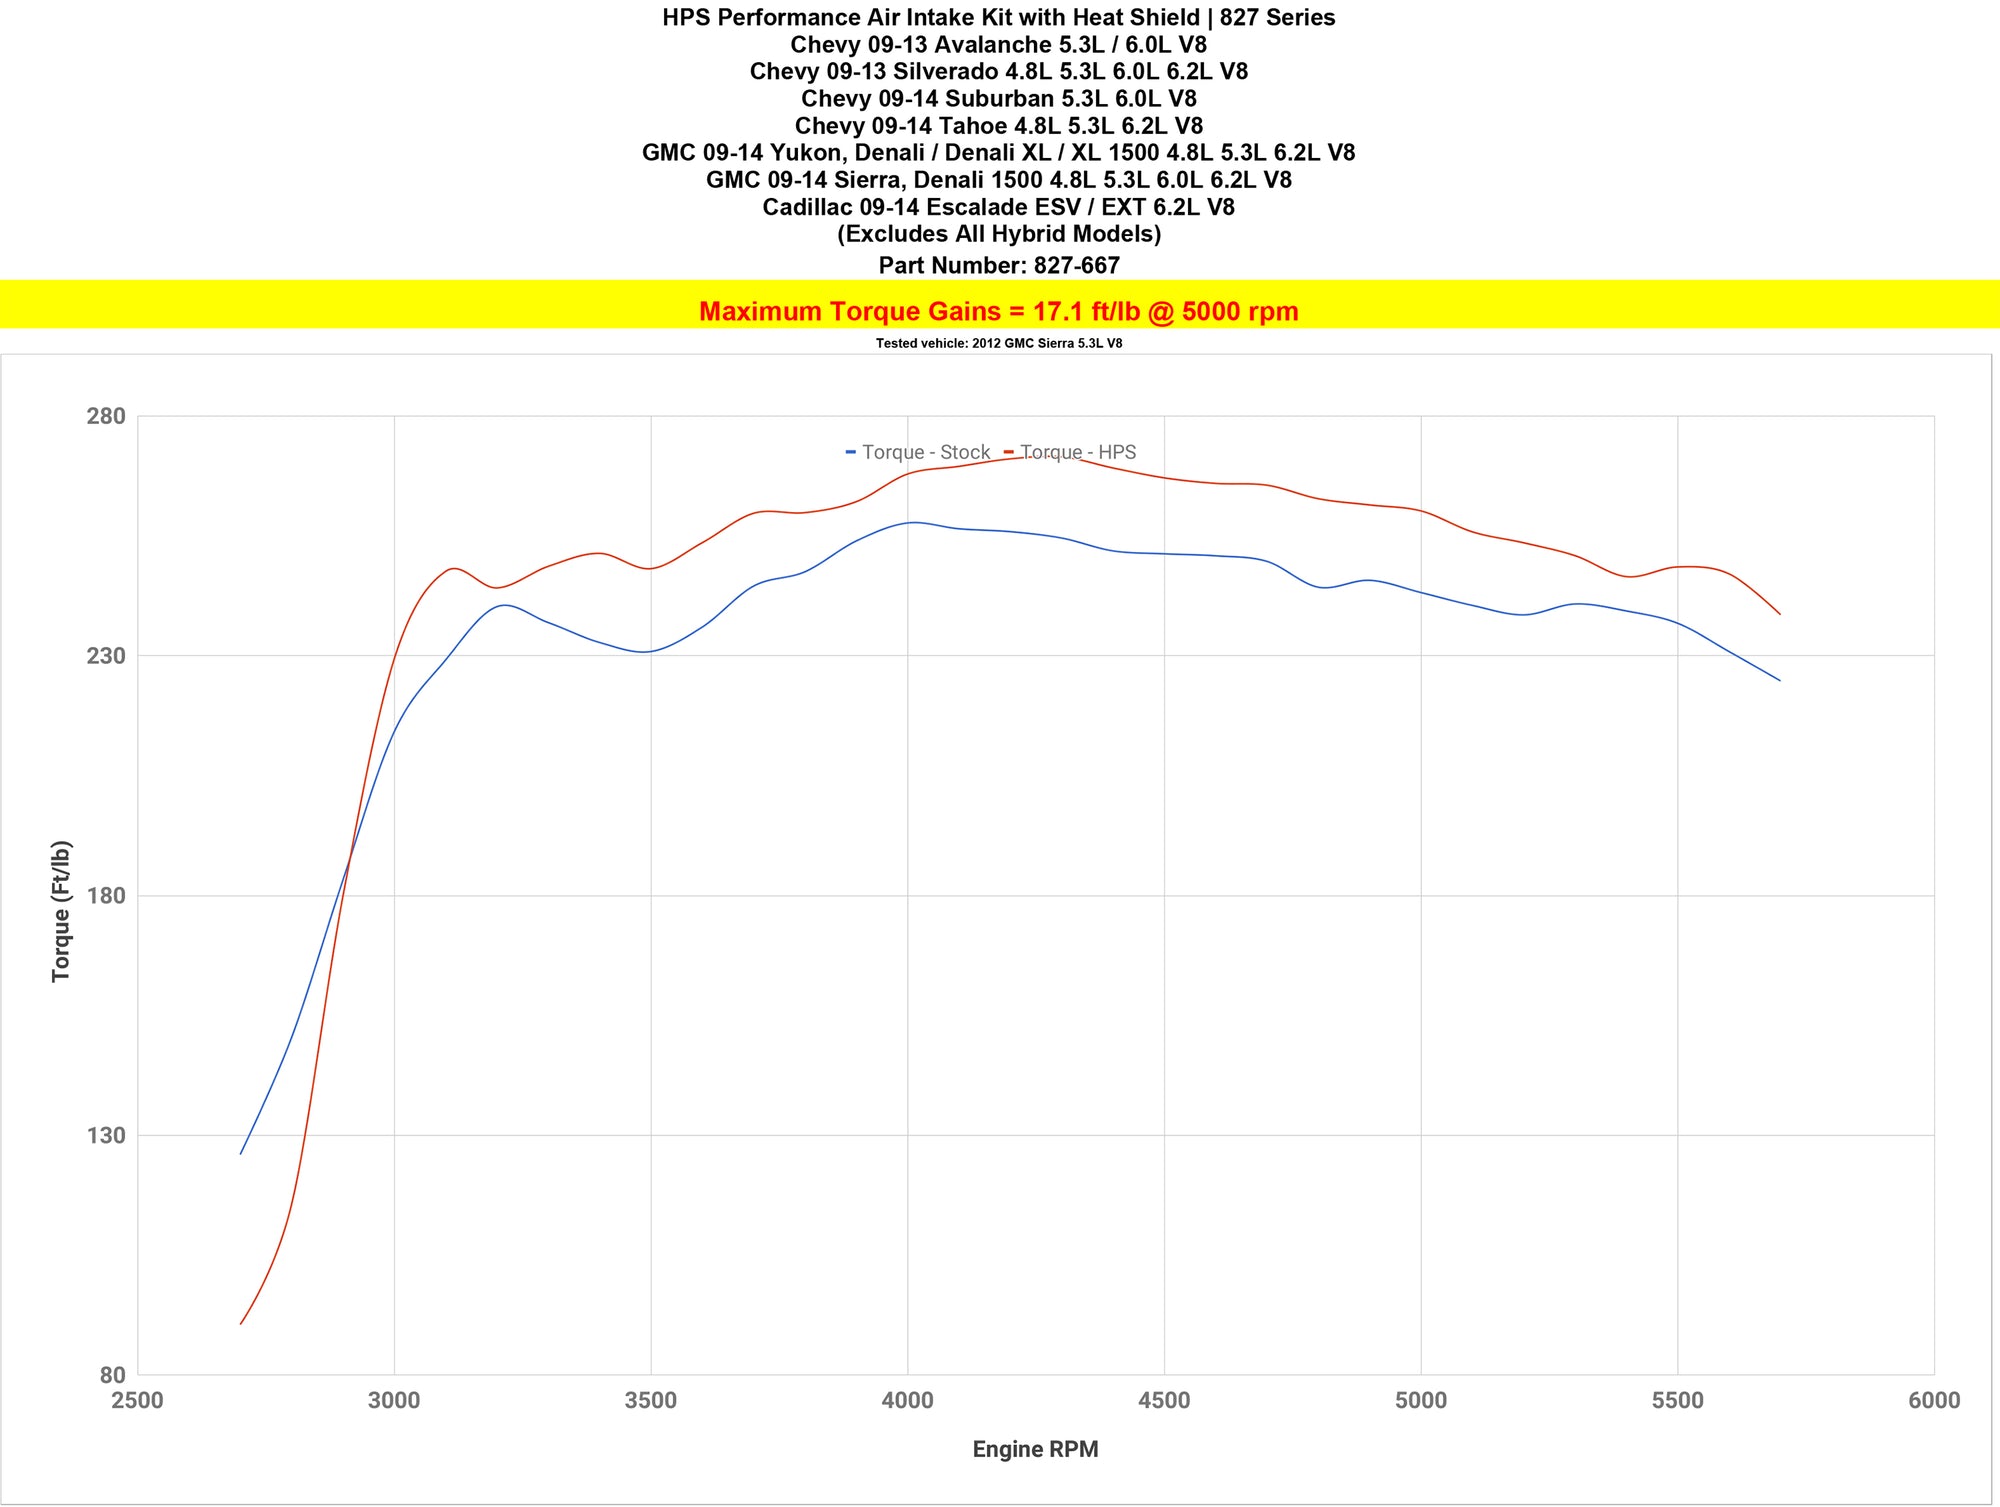 Dyno proven gains 17.1 ft/lb HPS Performance Shortram Air Intake Kit 2009-2014 Chevy Tahoe 4.8L 5.3L 6.2L V8 (Excludes Hybrid) 827-667P